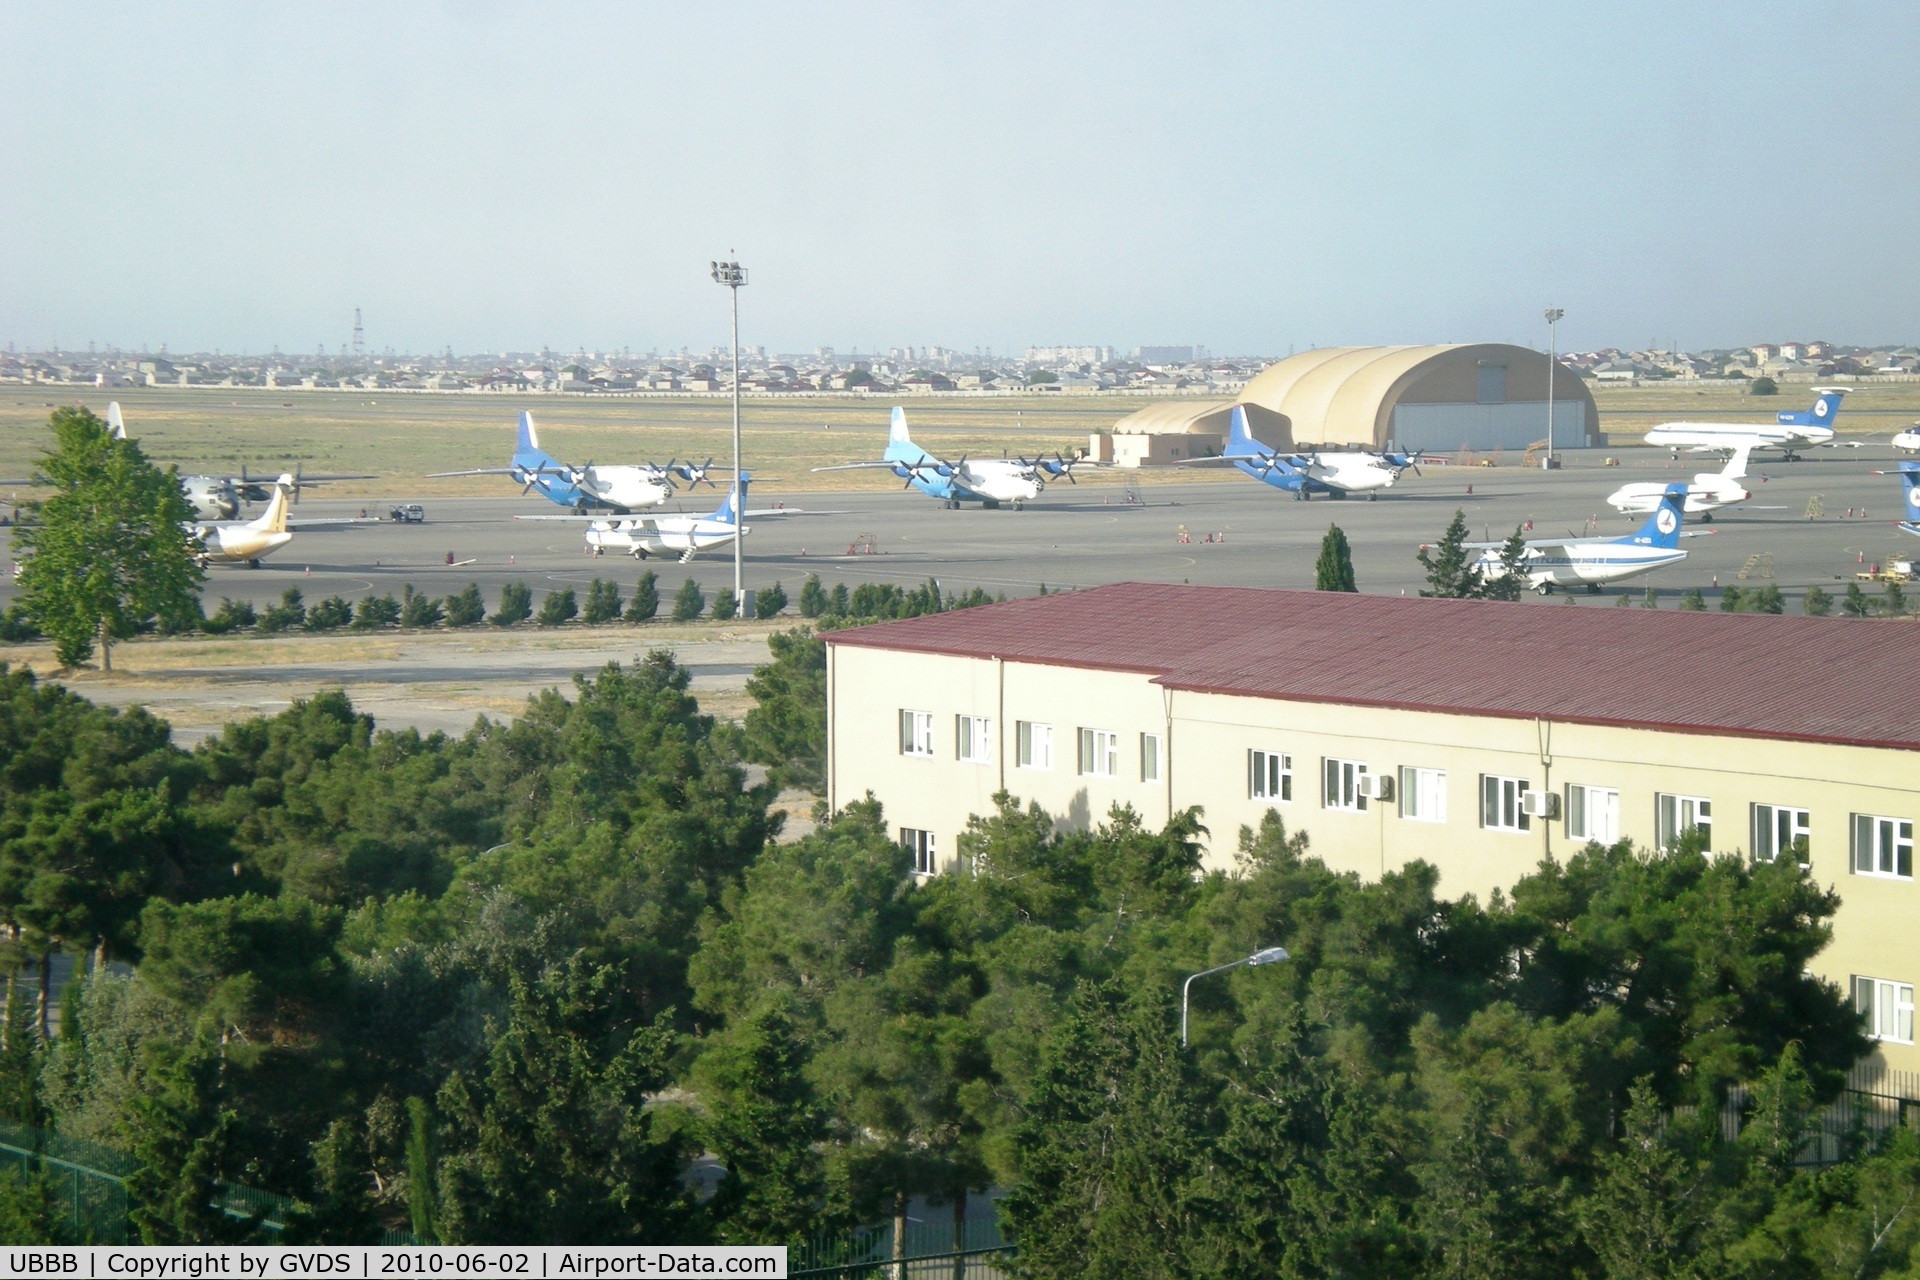 Heydar Aliyev International Airport, Baku Azerbaijan (UBBB) - Flightline